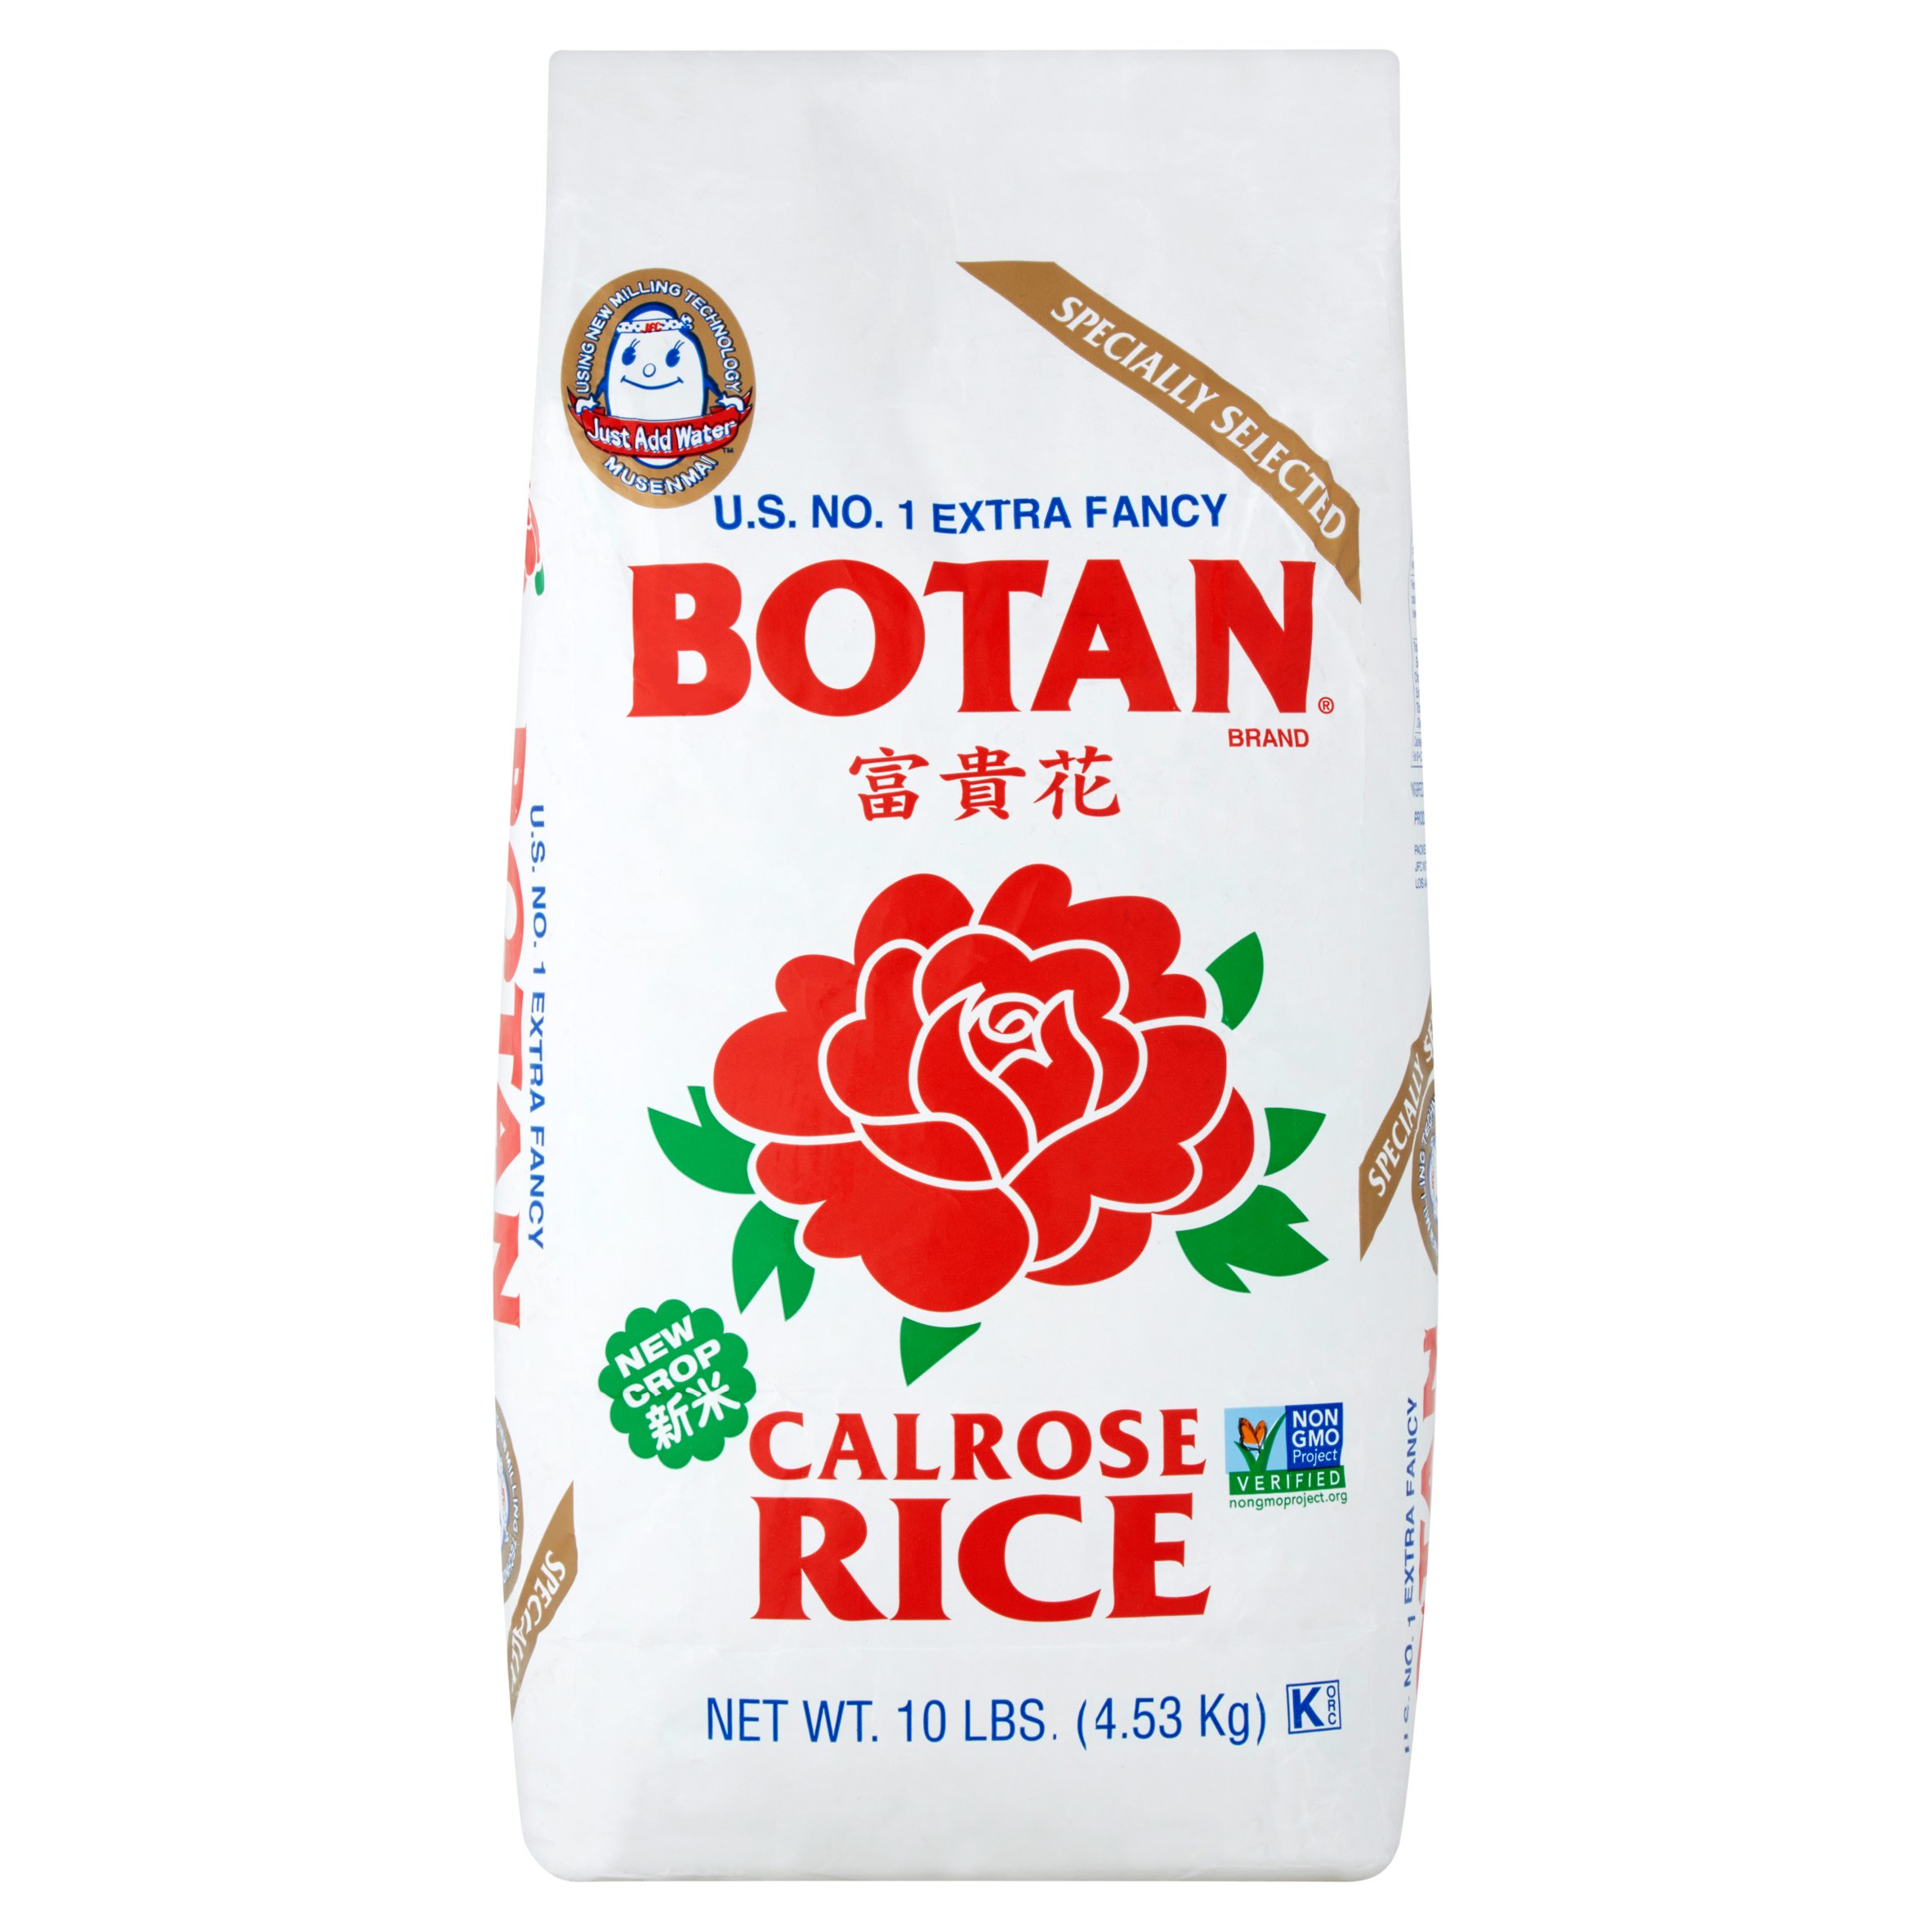 Botan Calrose Rice, 10 LB - image 1 of 6